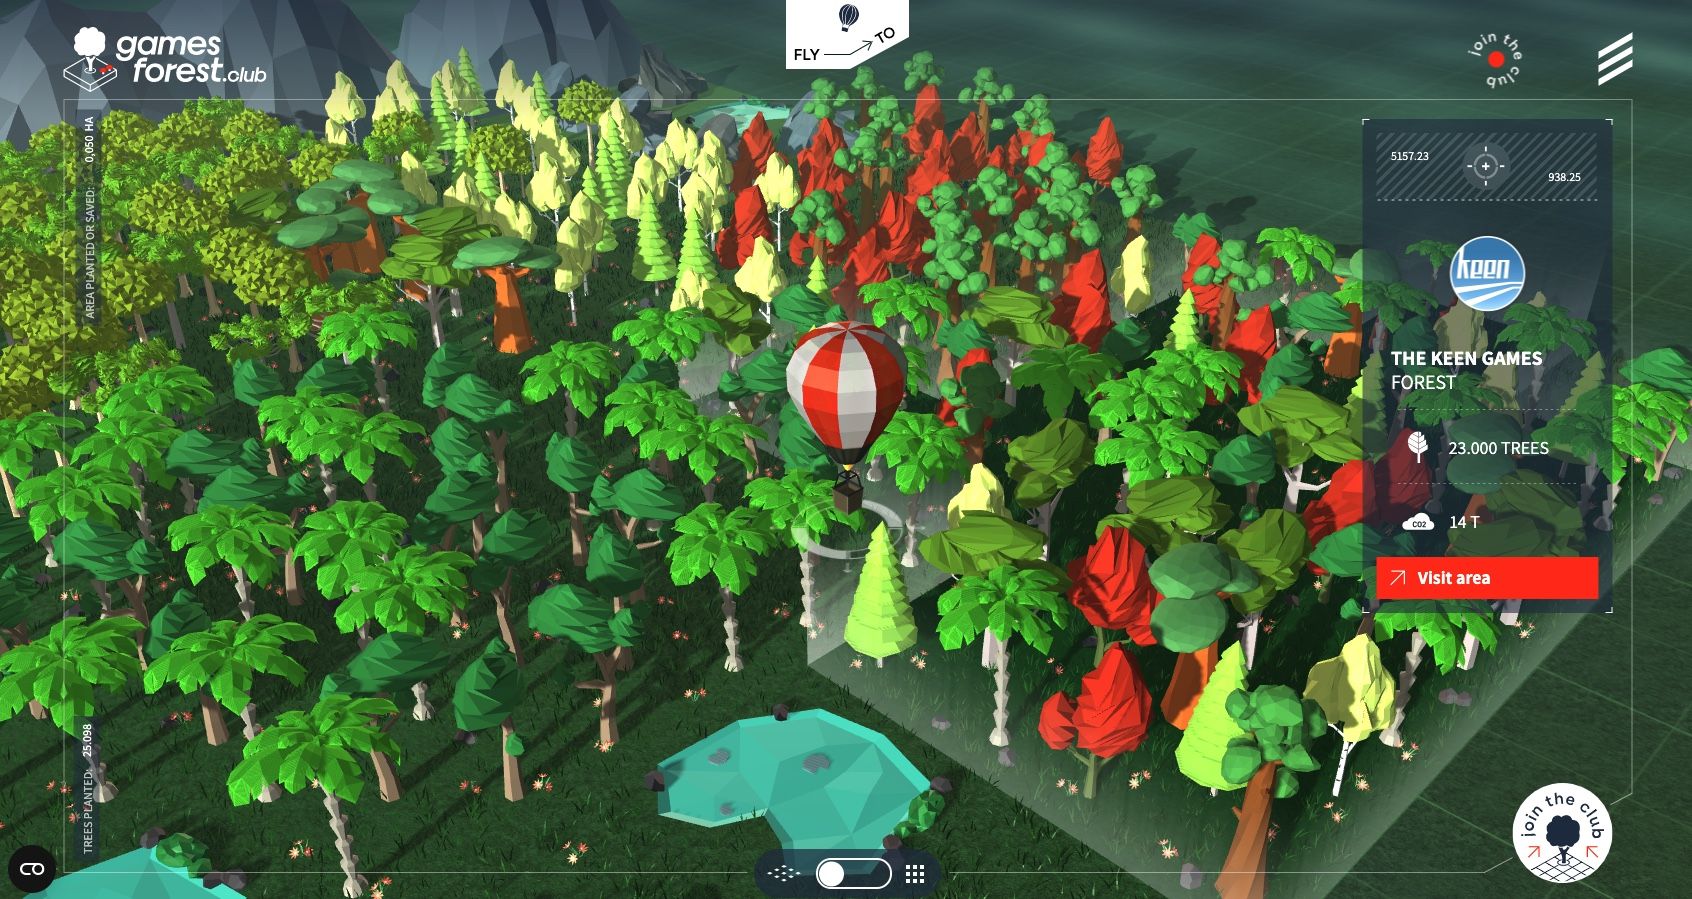 A digital representation of the "GamesForest".